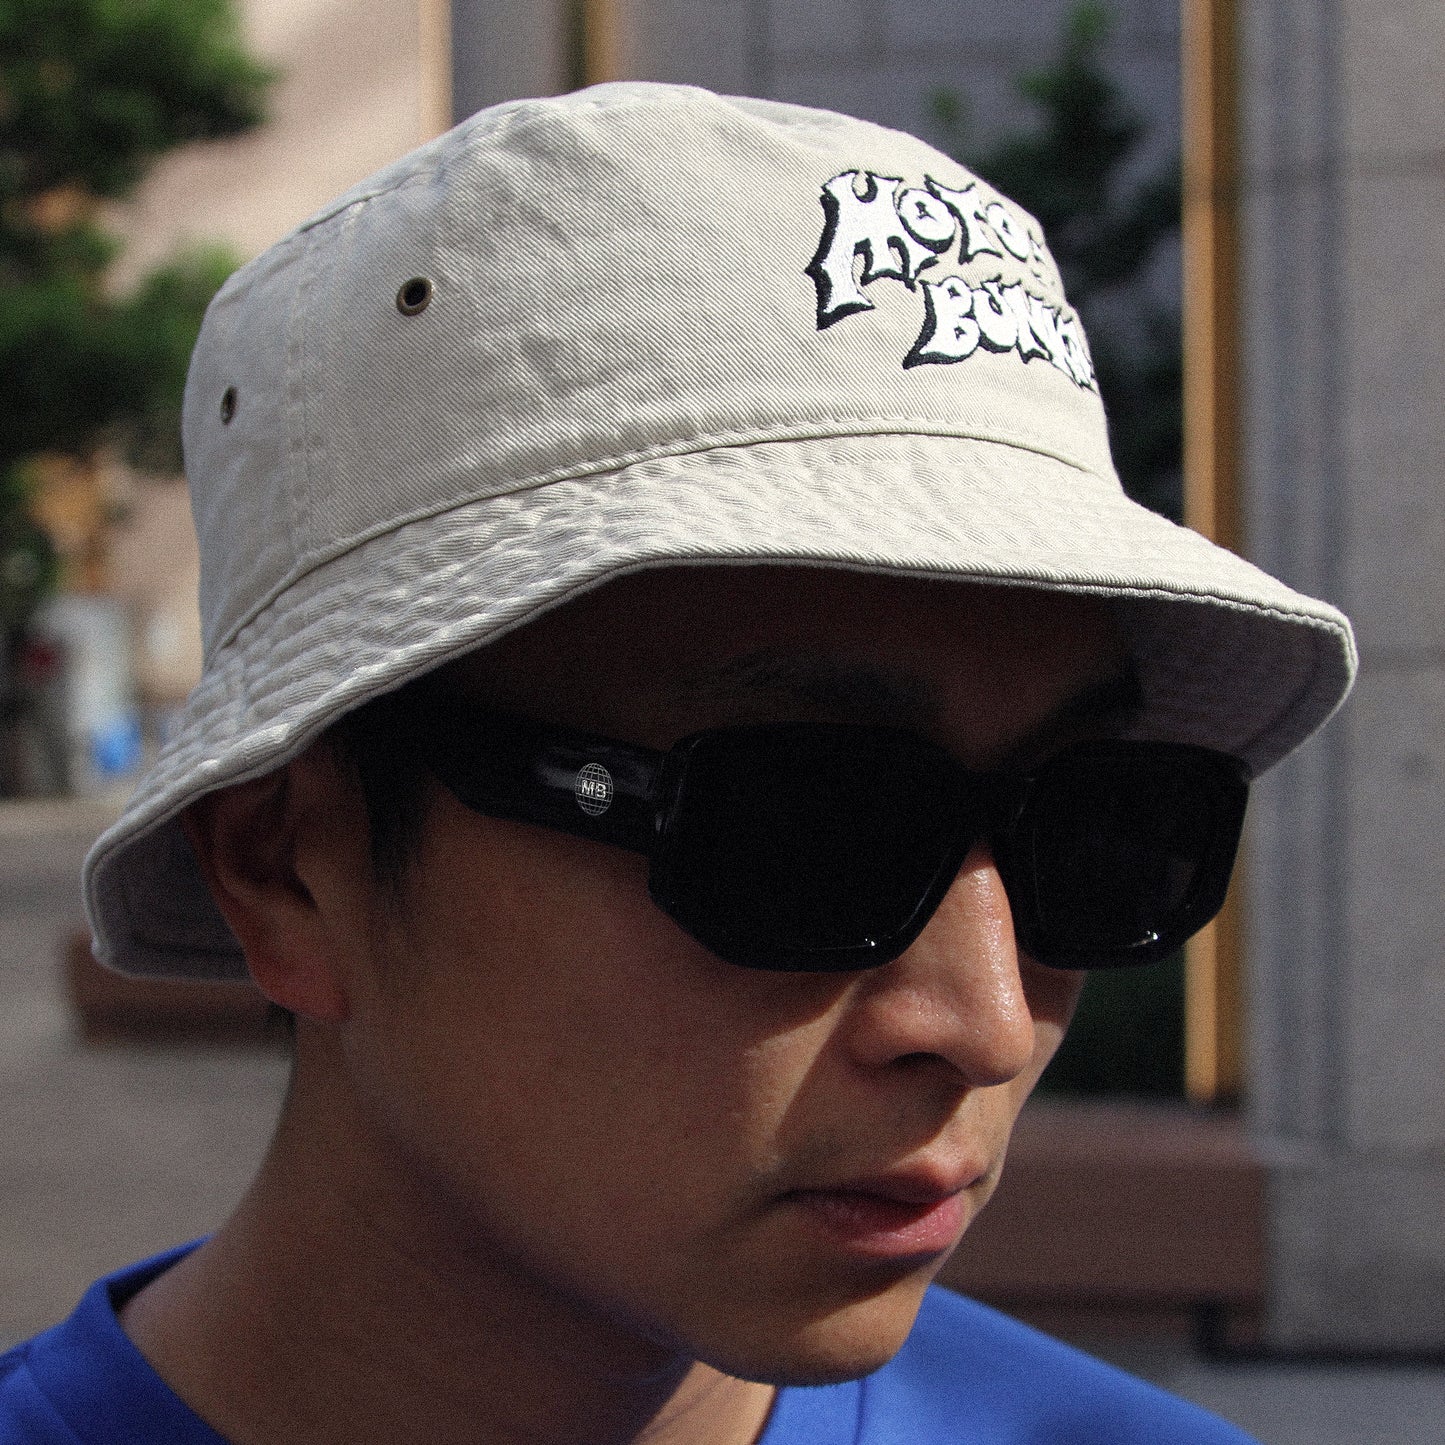 MOTO-BUNKA - Summer Logo Bucket Hat/Khaki